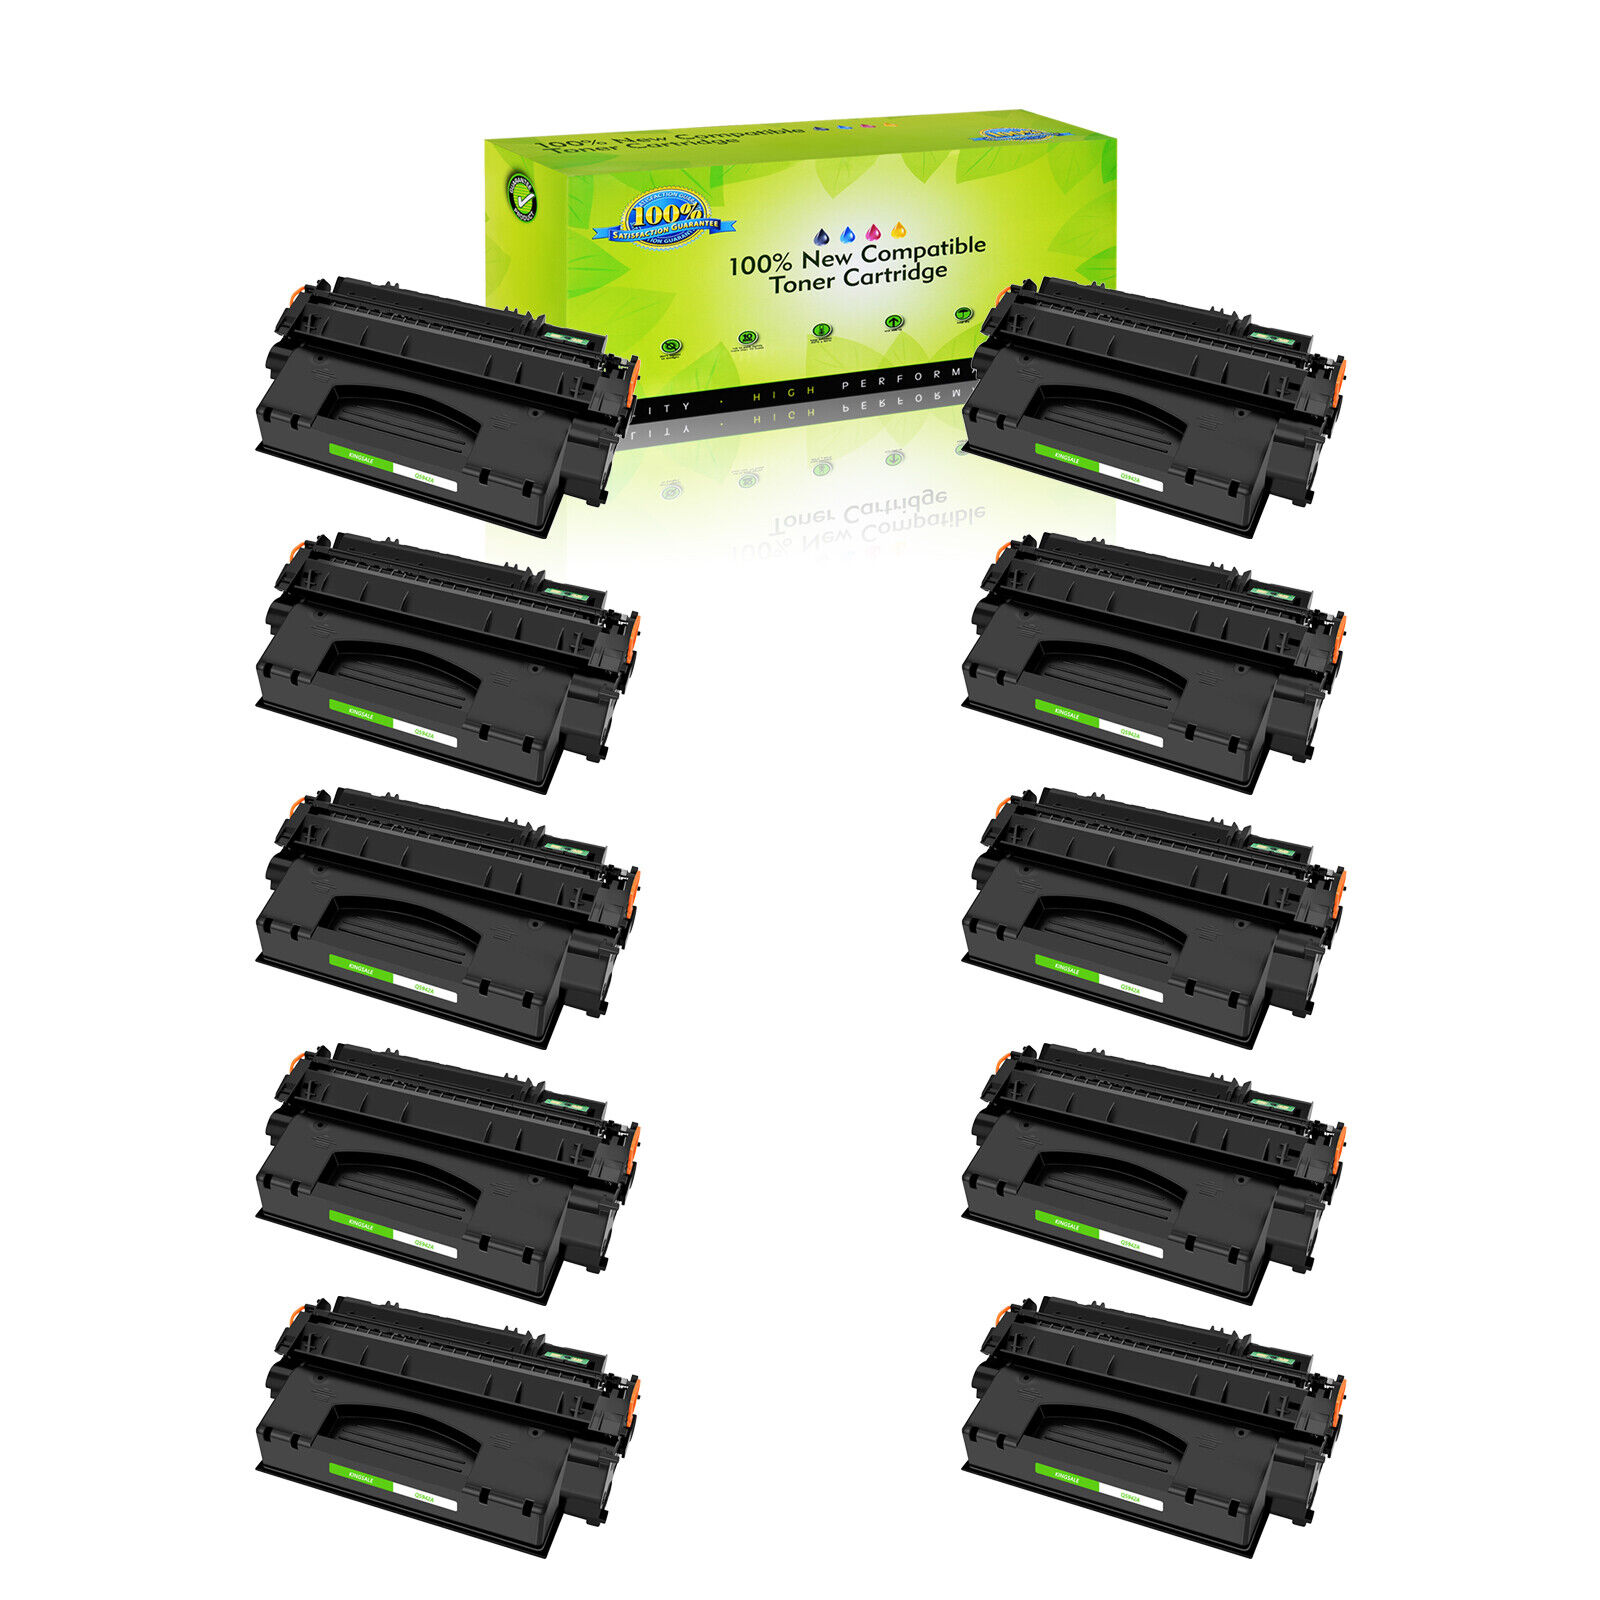 10PK Q5942A Toner Cartridge for HP Laserjet 4250 4250dtn 4250dtnsl 4250n 4250tn